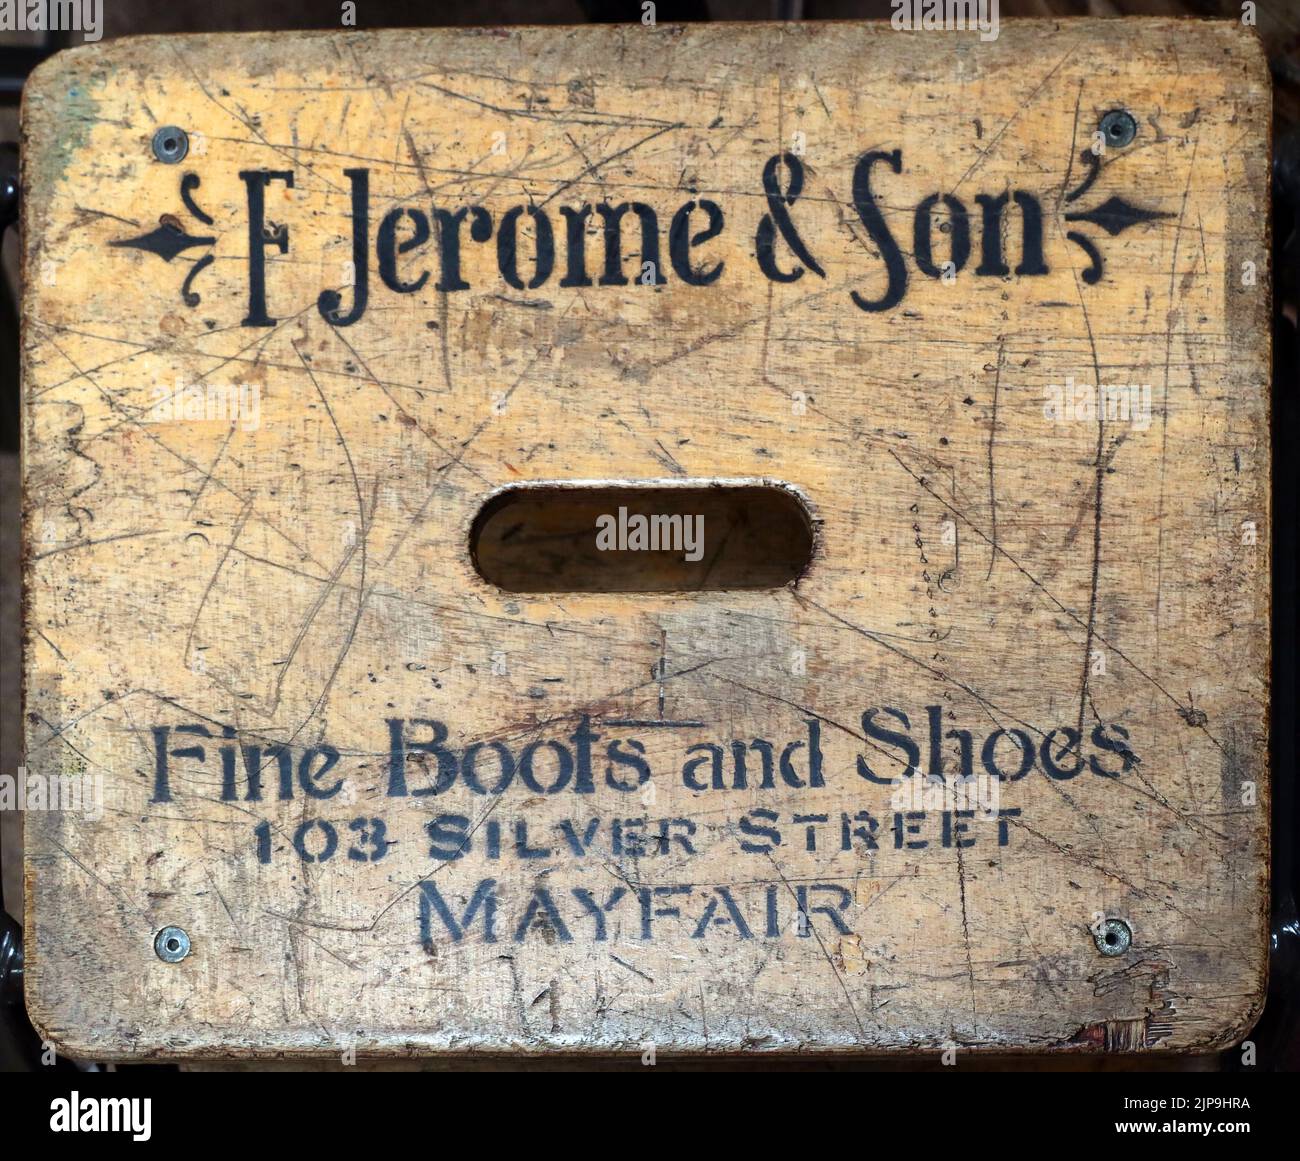 Ancienne caisse en bois, F Jerome & Sons, chaussures et bottes fines, 103 Silver Street, Mayfair, Londres, Angleterre, ROYAUME-UNI Banque D'Images